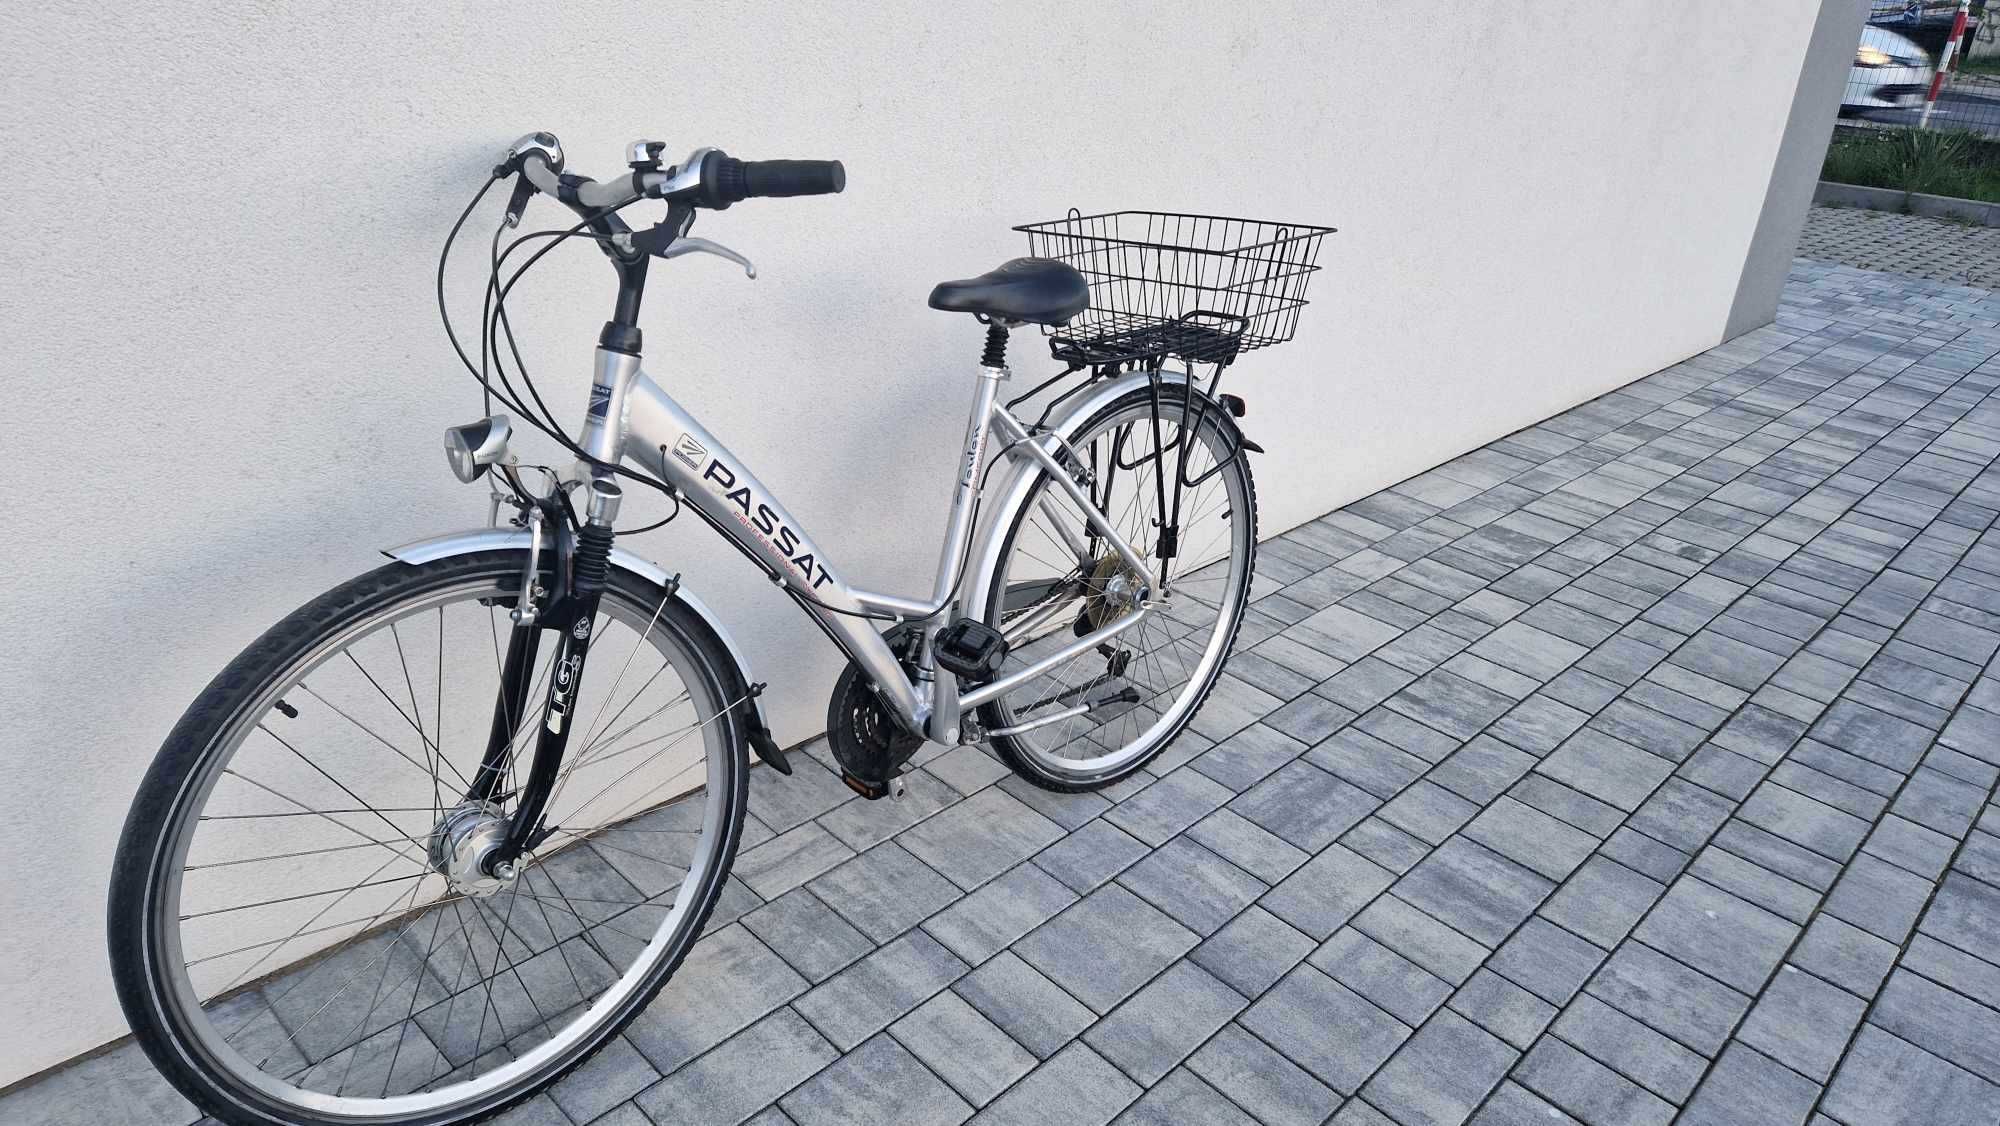 Sprzedam rower aluminiowy  PASSAT TOULON COMFORT, koła 28 cali.